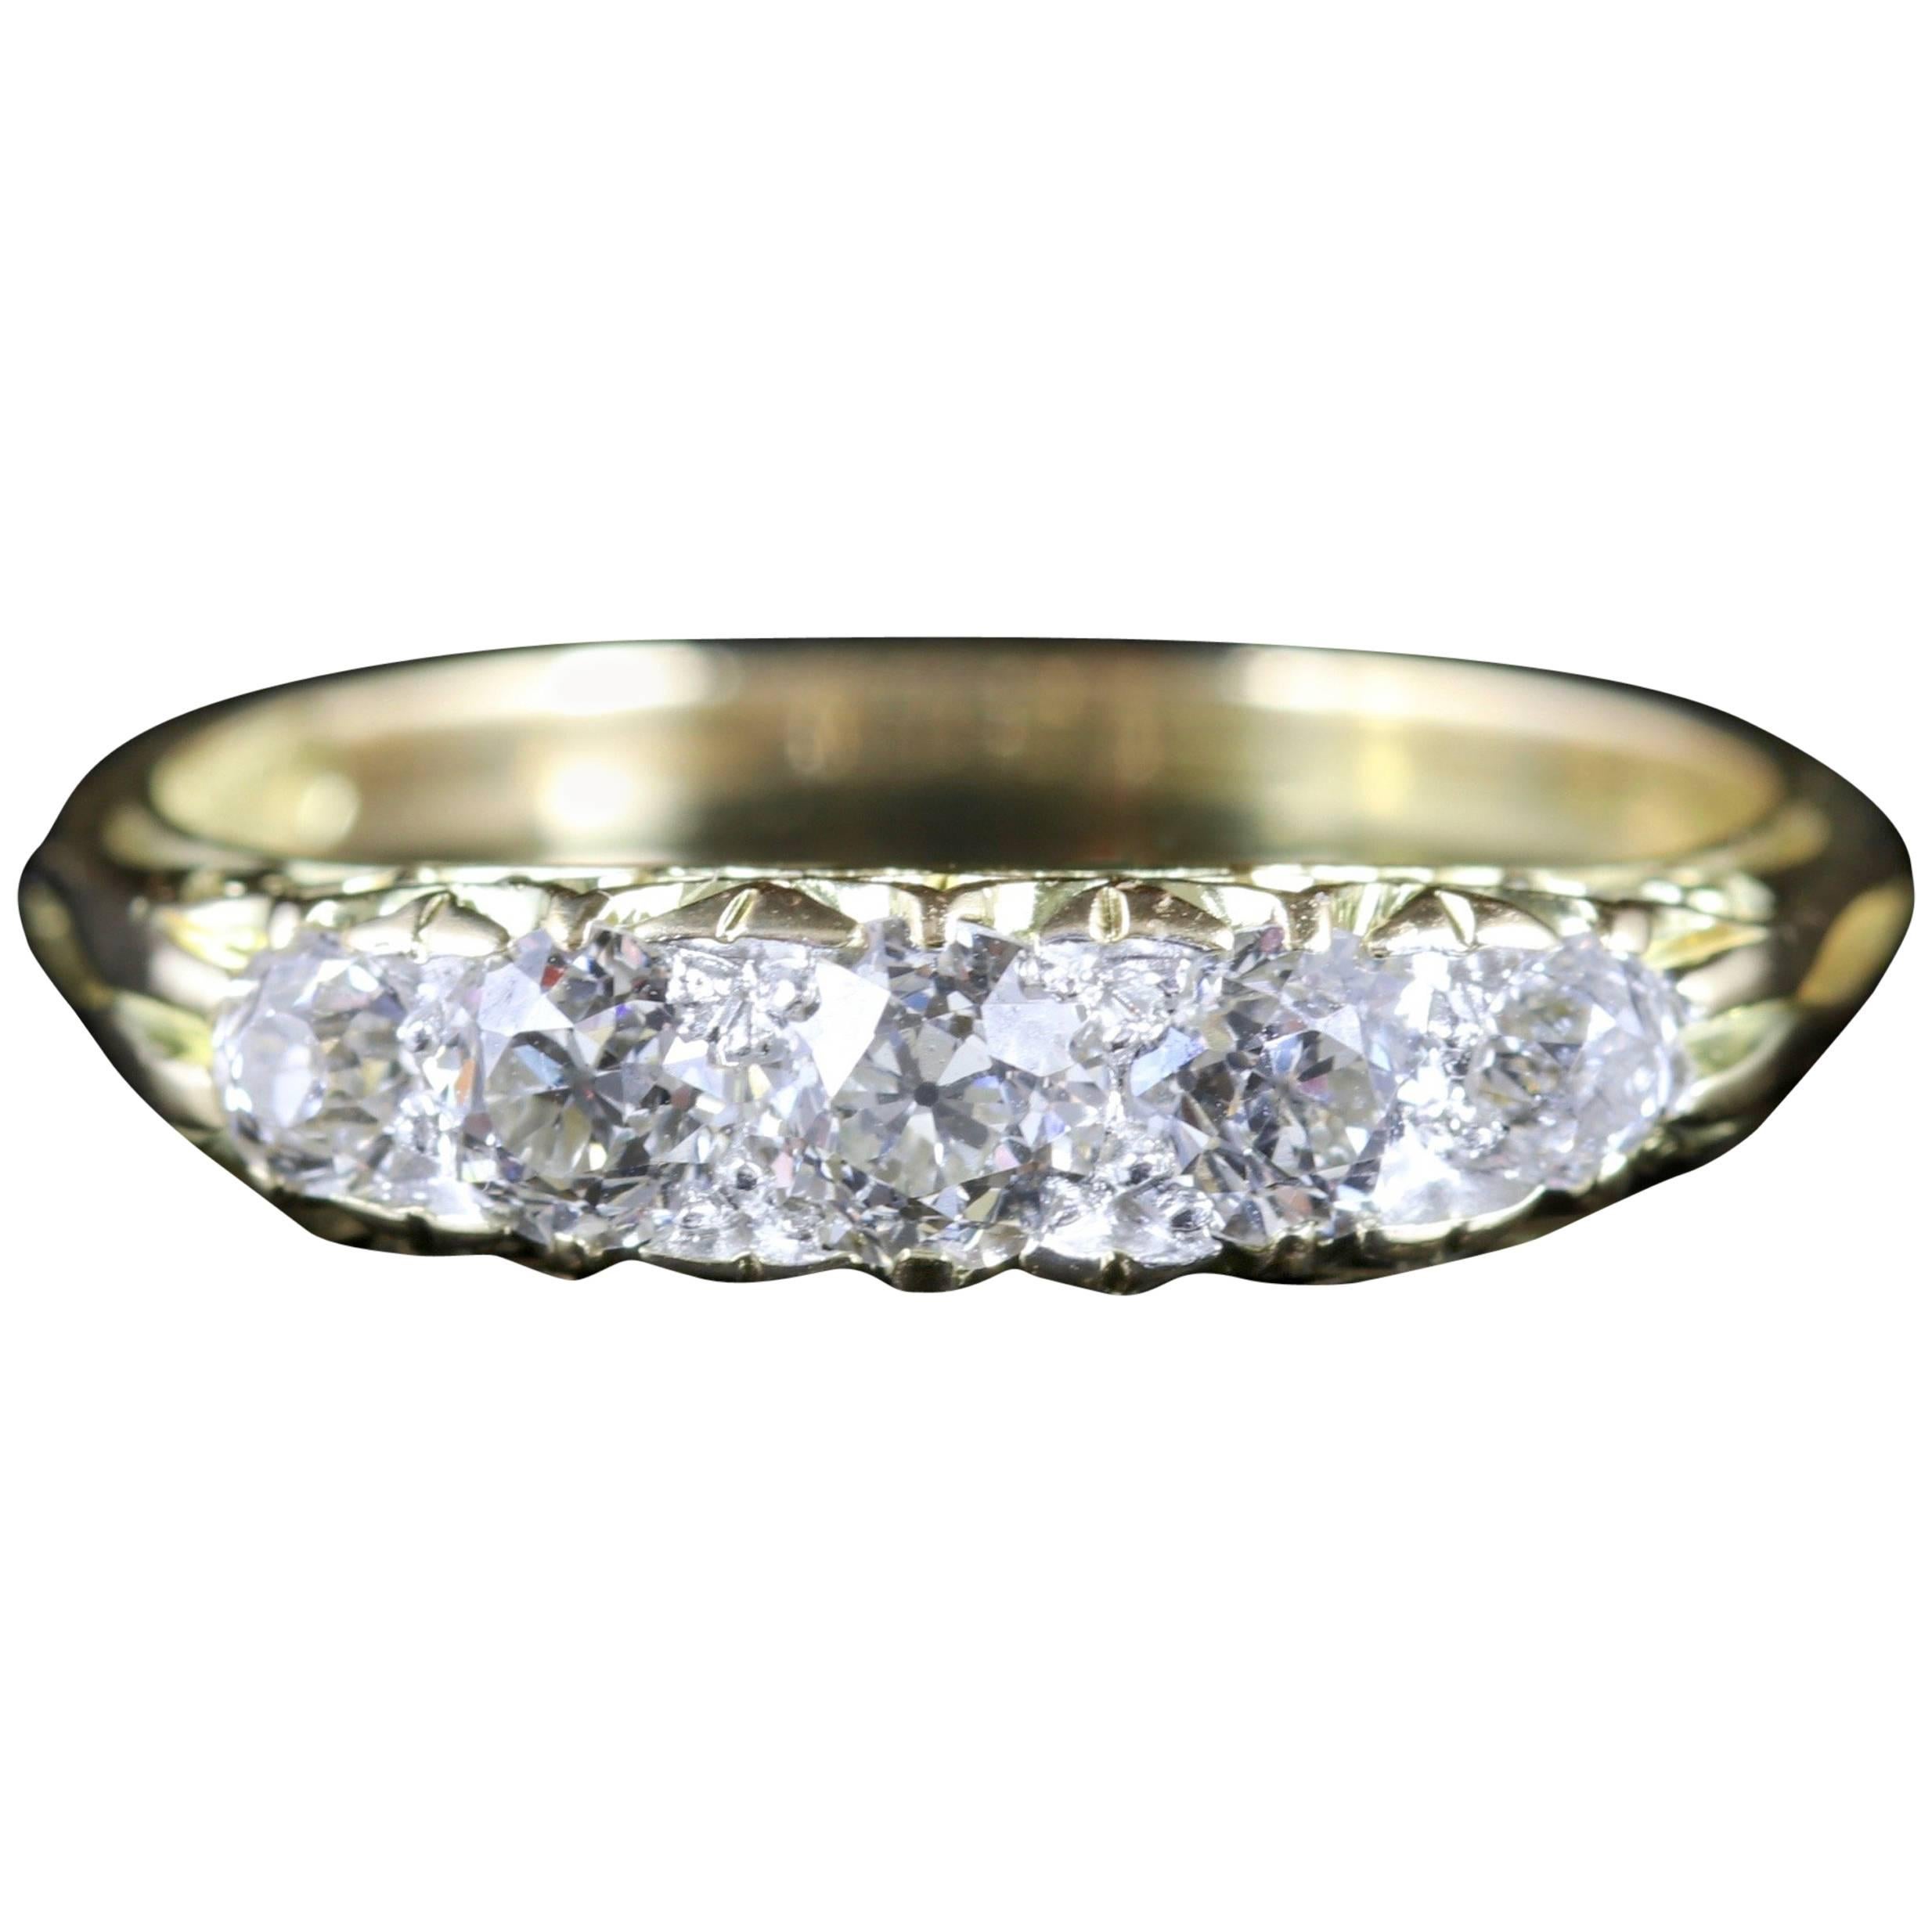 Antique Victorian Pave Set Diamond Ring Five-Stone 18 Carat, circa 1880